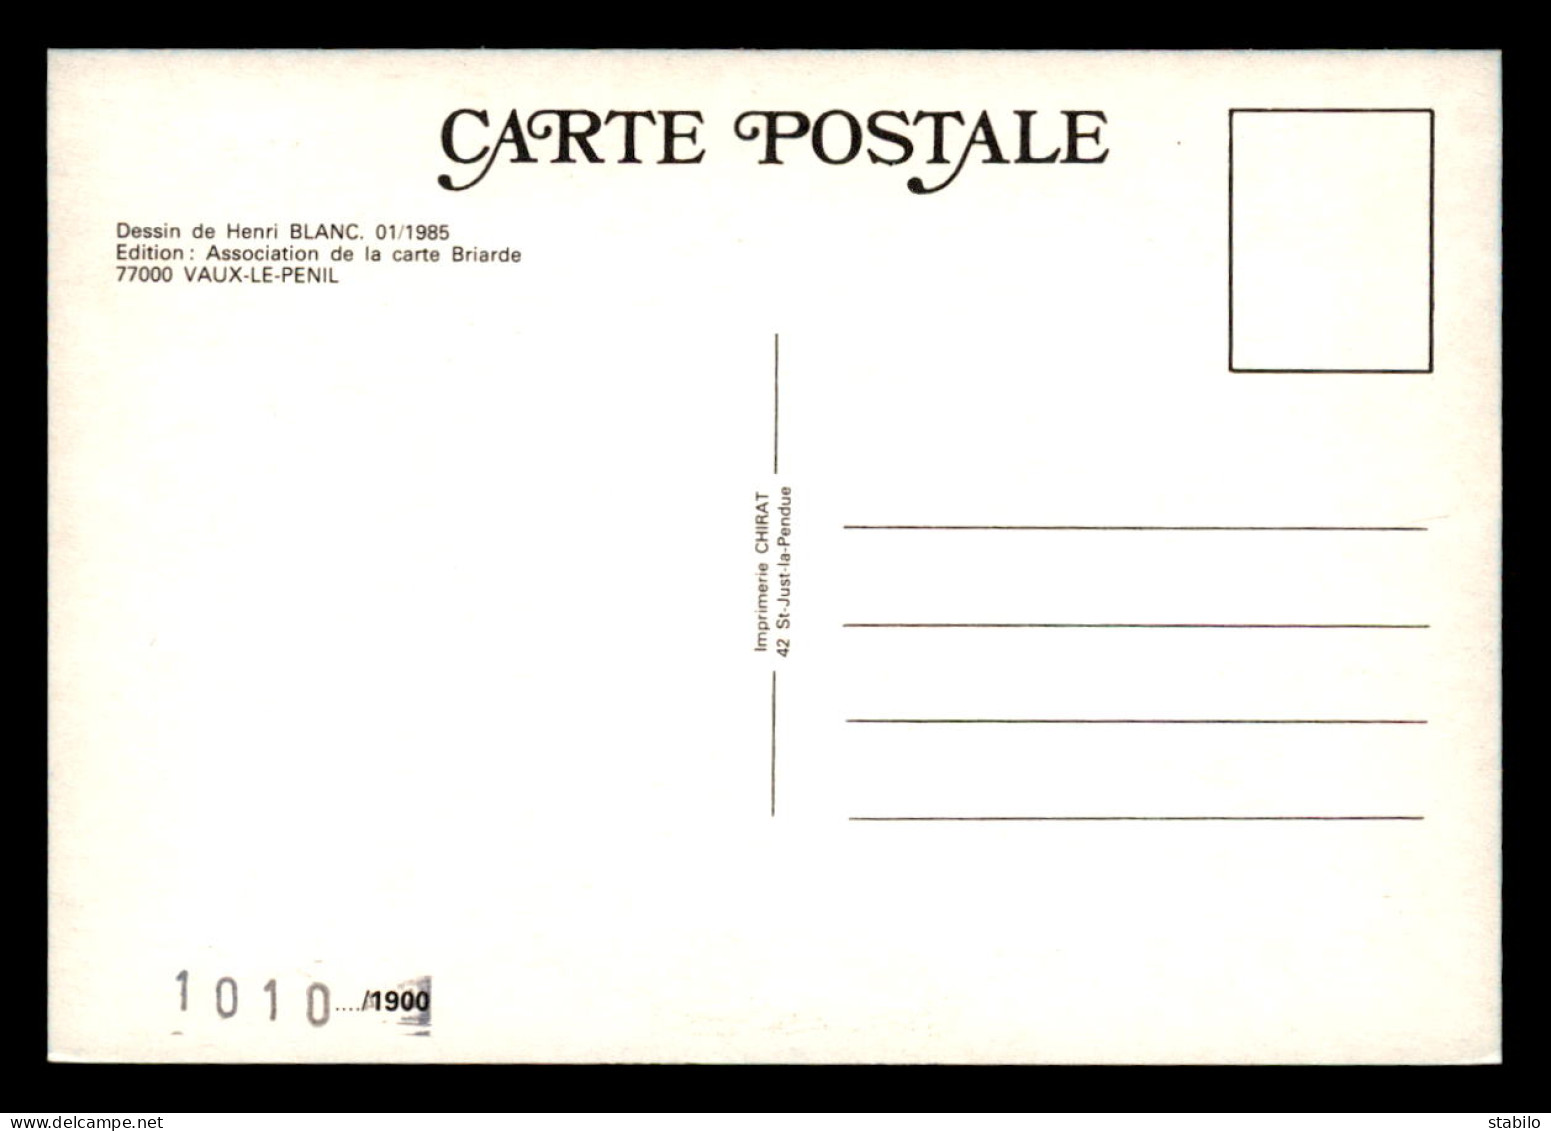 ASSOCIATION DE LA CARTE POSTALE BRIARDE - DESSIN DE HENRI BLANC JANVIER 1985 - CARTE NUMEROTEE - Bourses & Salons De Collections